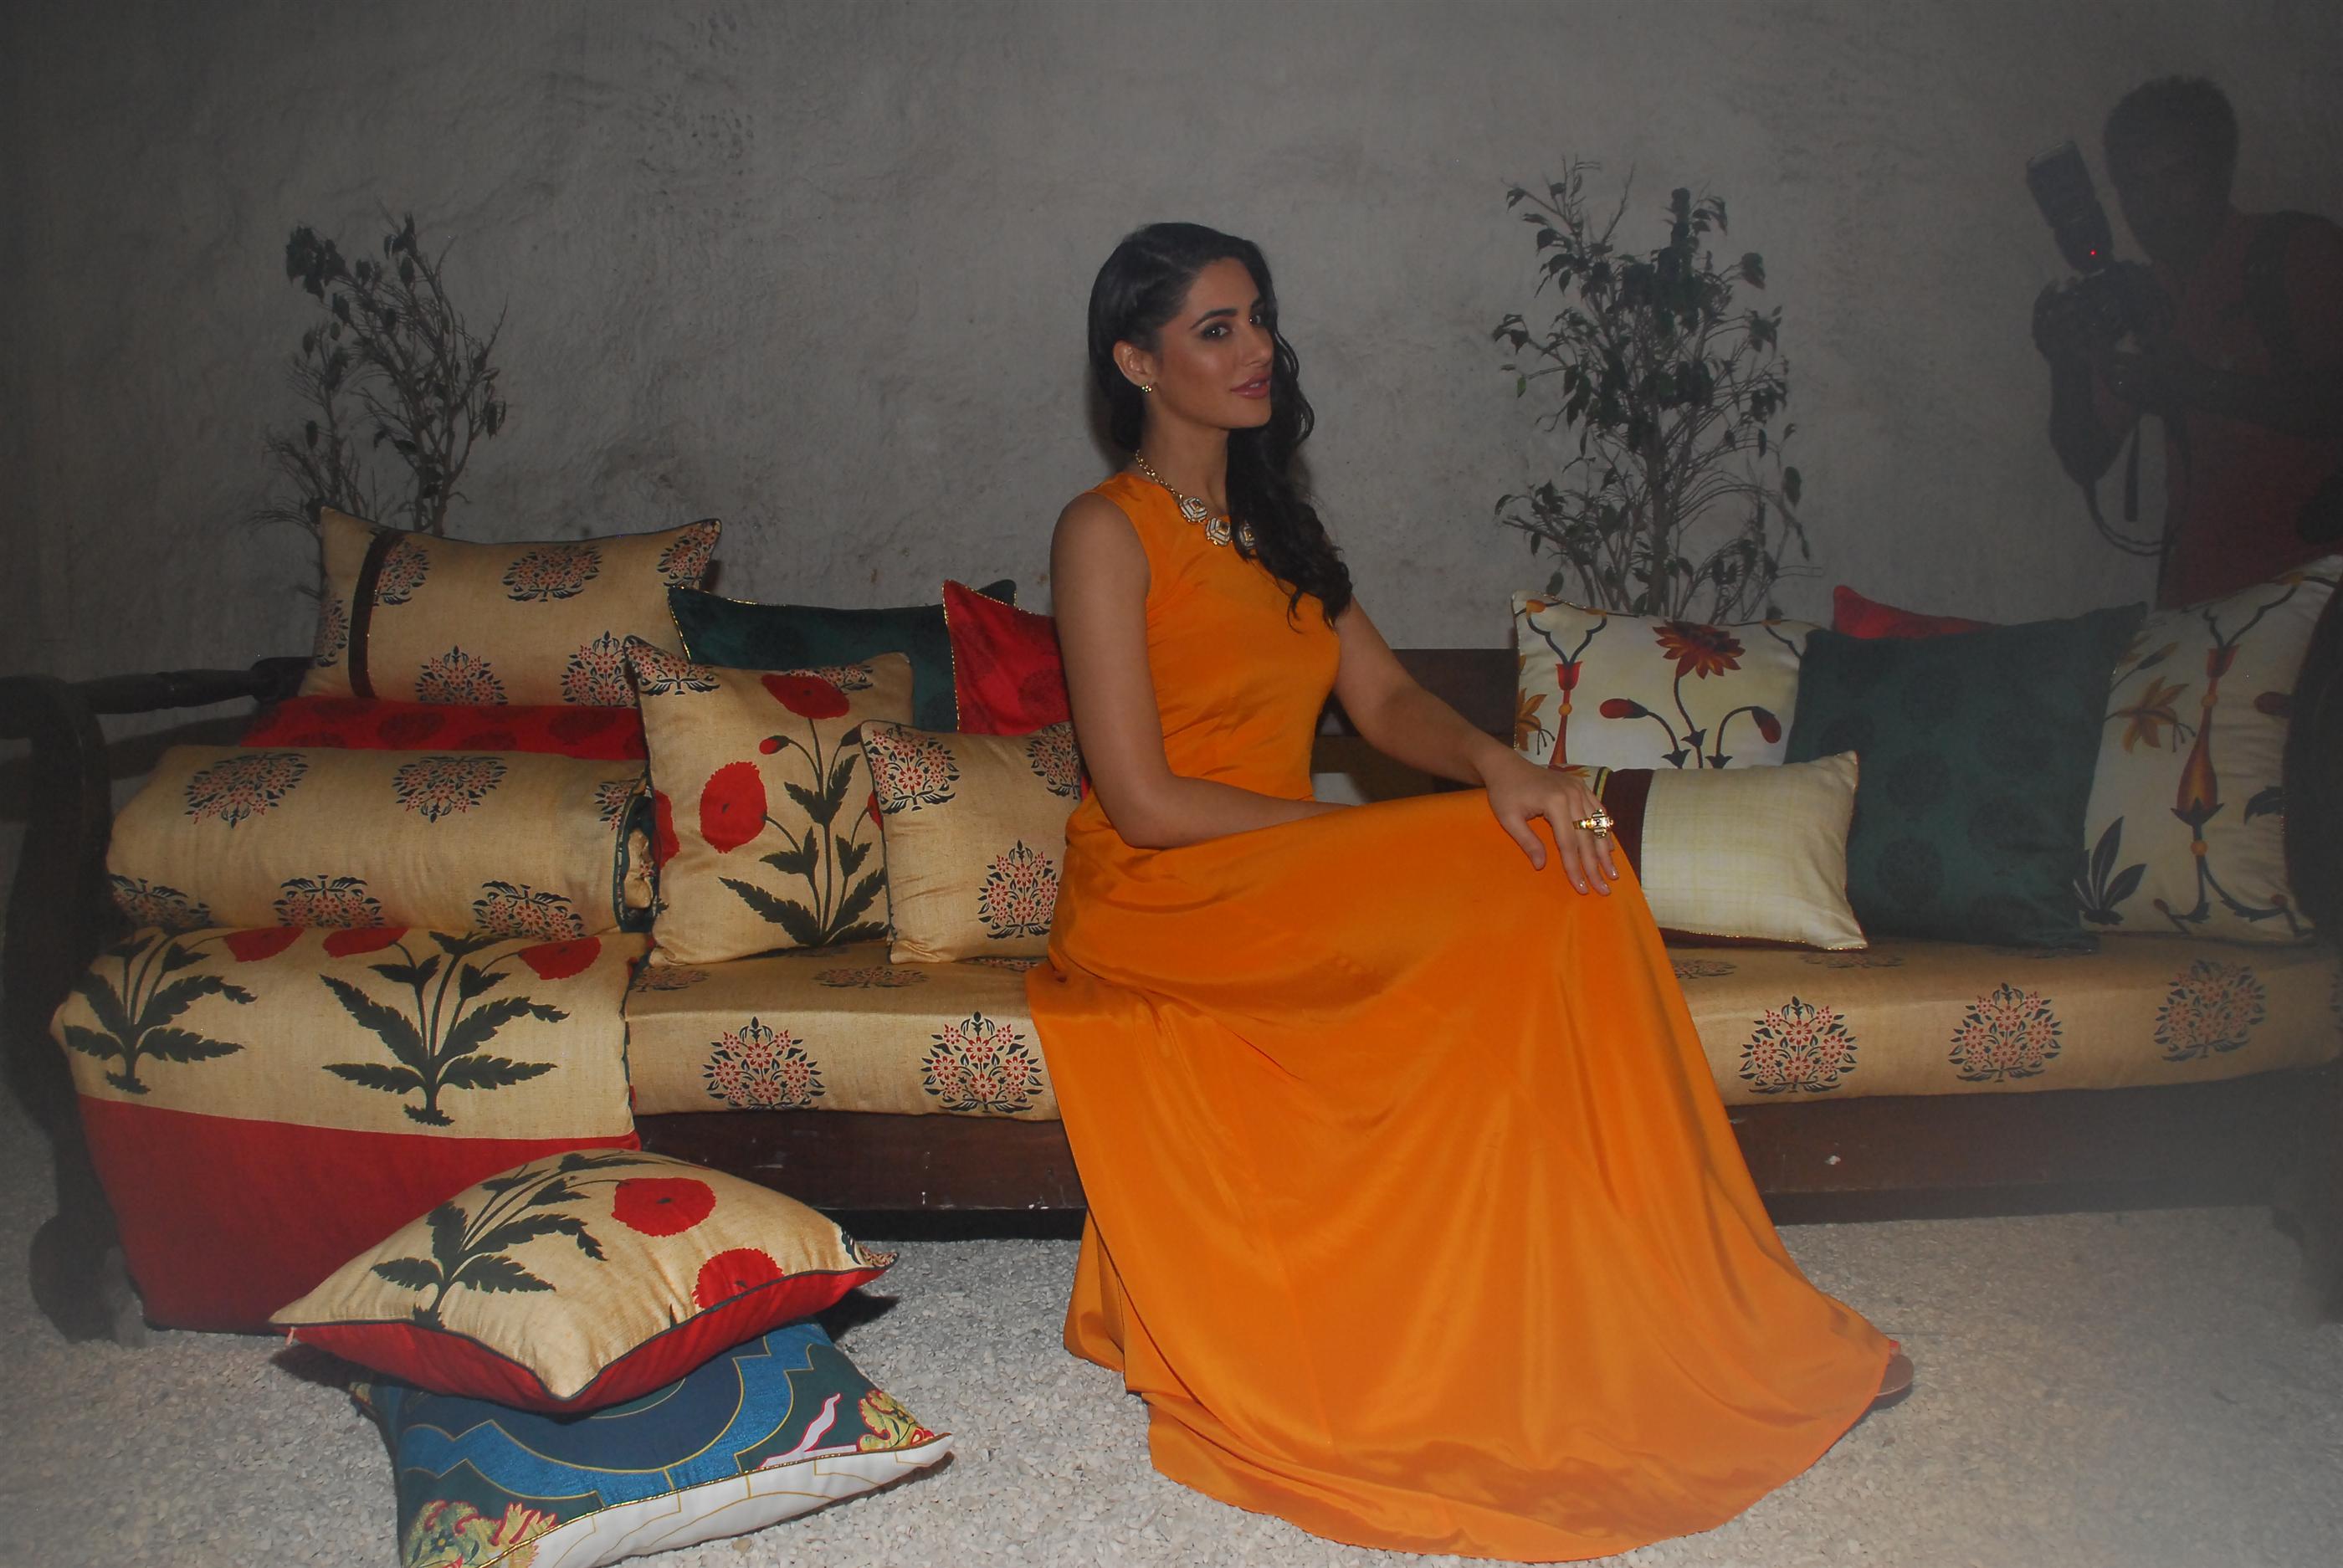 Nargis Fakhri Launch Portico Mission Home Fashion